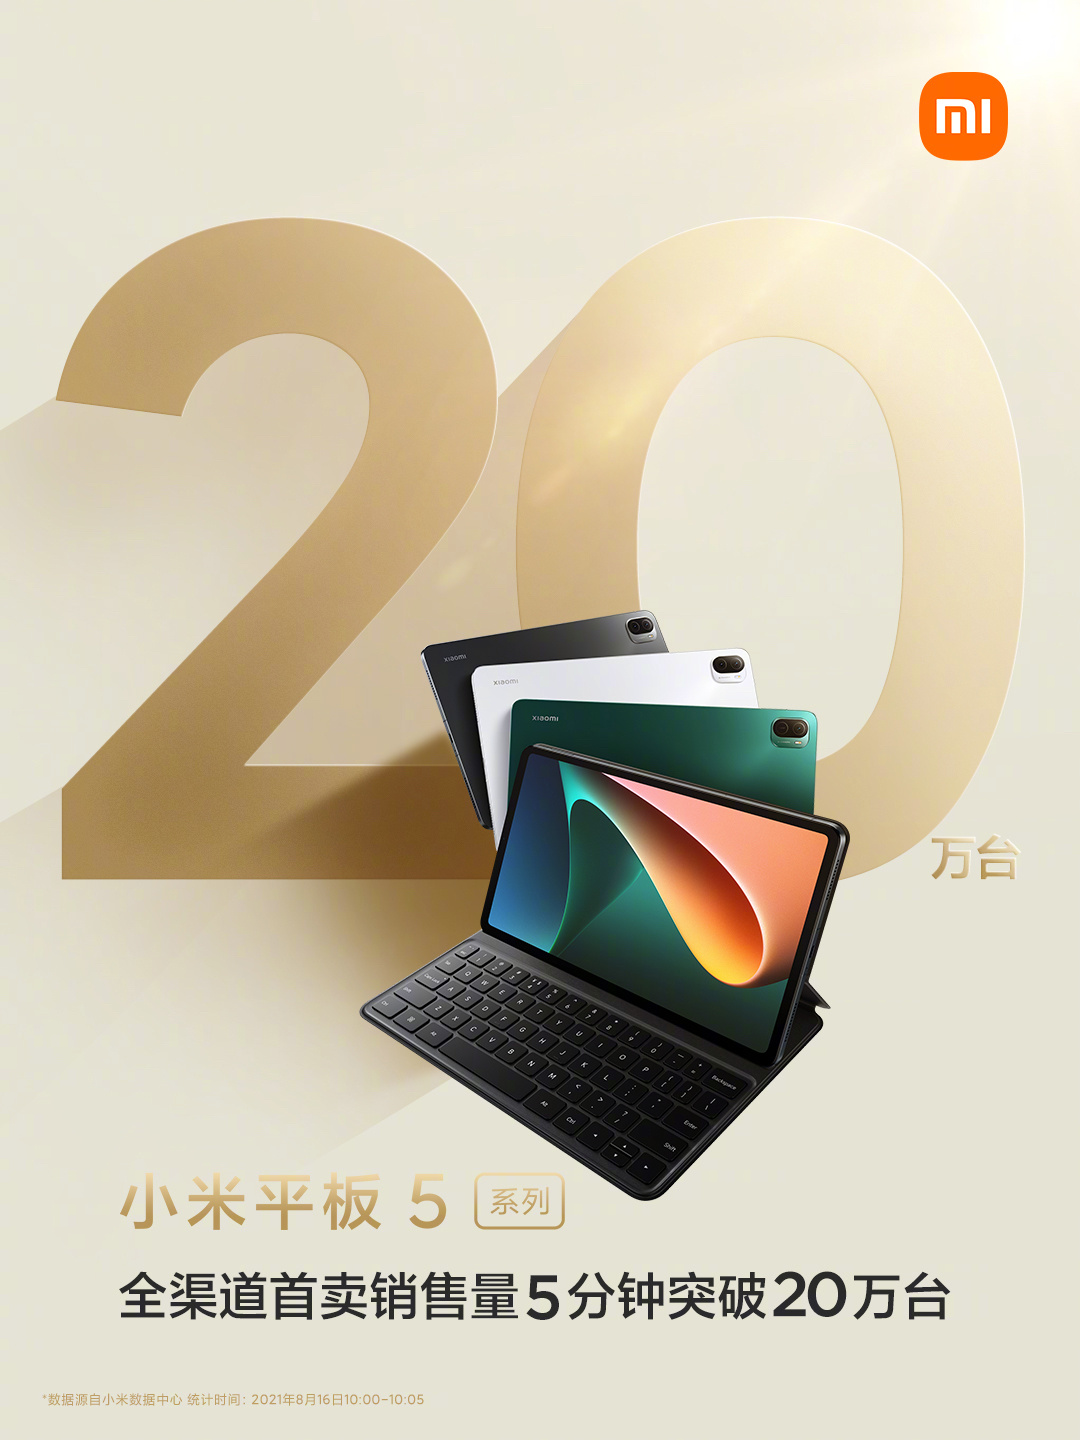  Впечатляющие первые продажи Xiaomi Mix 4 и Mi Pad 5 Xiaomi  - pervye_prodazhi_xiaomi_mix_4_i_mi_pad_5_ozolotili_kompaniu_2